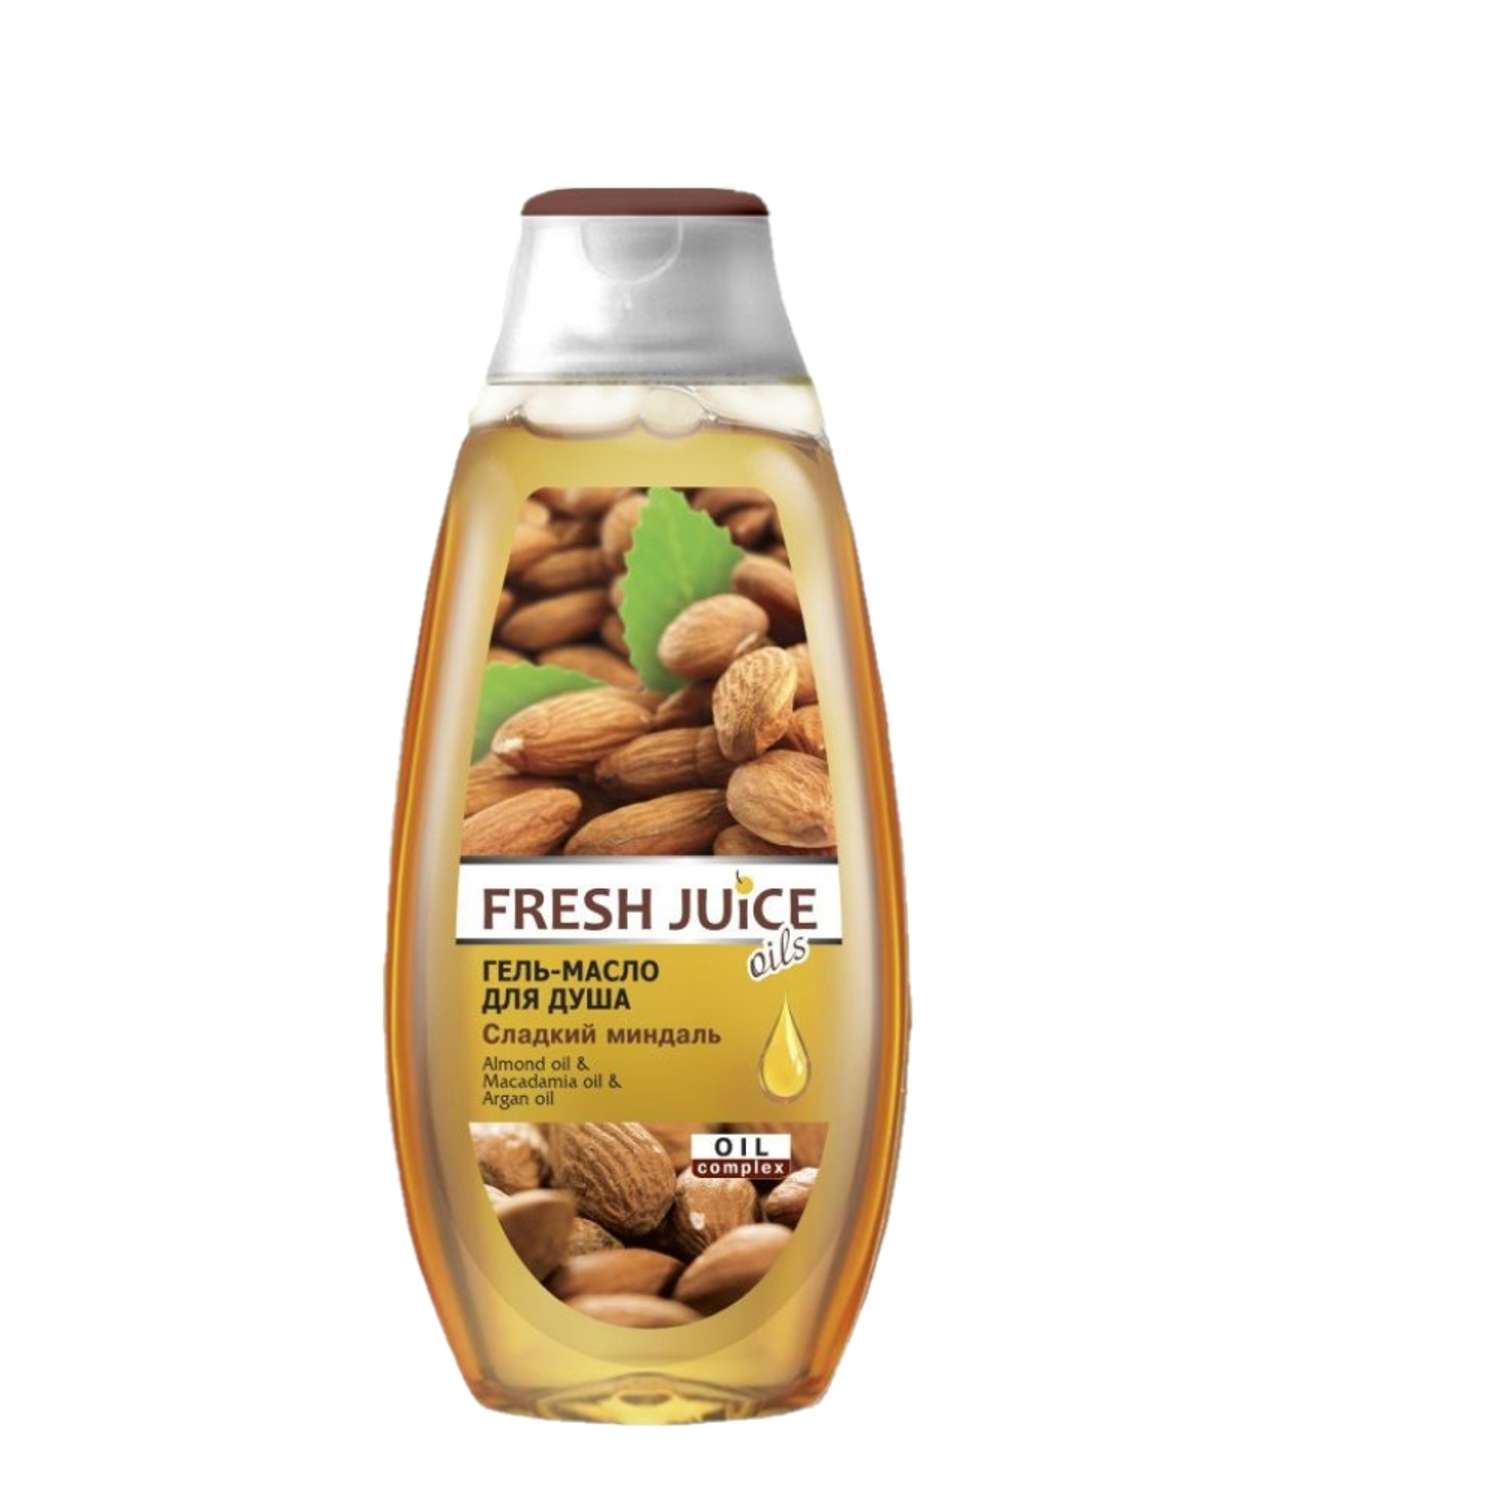 Fresh Juice крем-гель для душа Sweet Almond 400 мл. Масло Fresh Juice. Фреш Джус гель для душа 400мл. Гели масло для душа Фреш Джус. Гель для душа миндаль